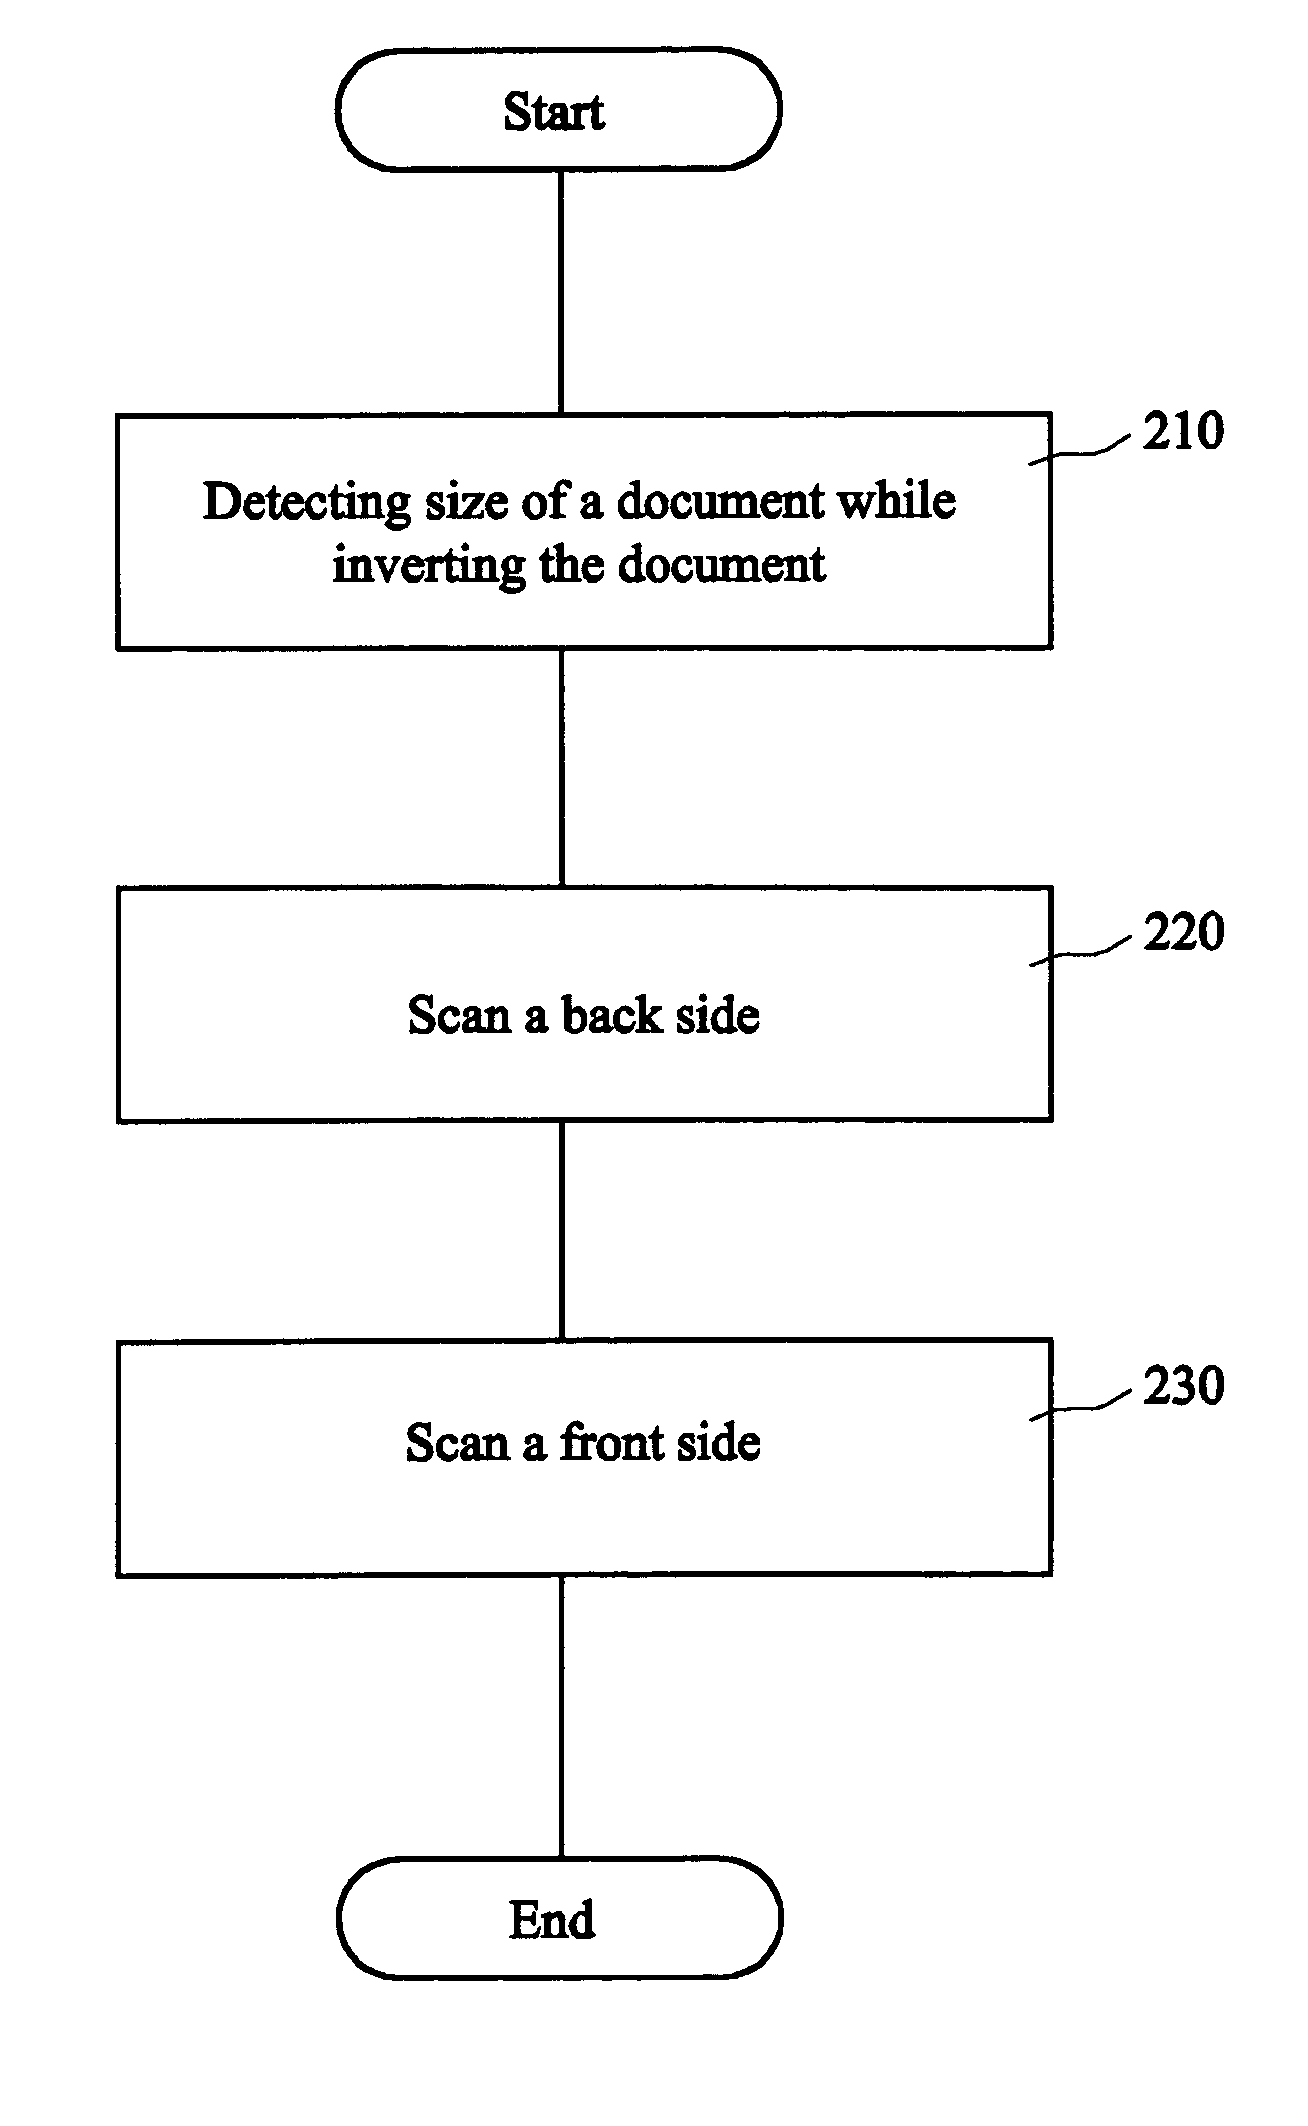 Duplex scan method of detecting document size